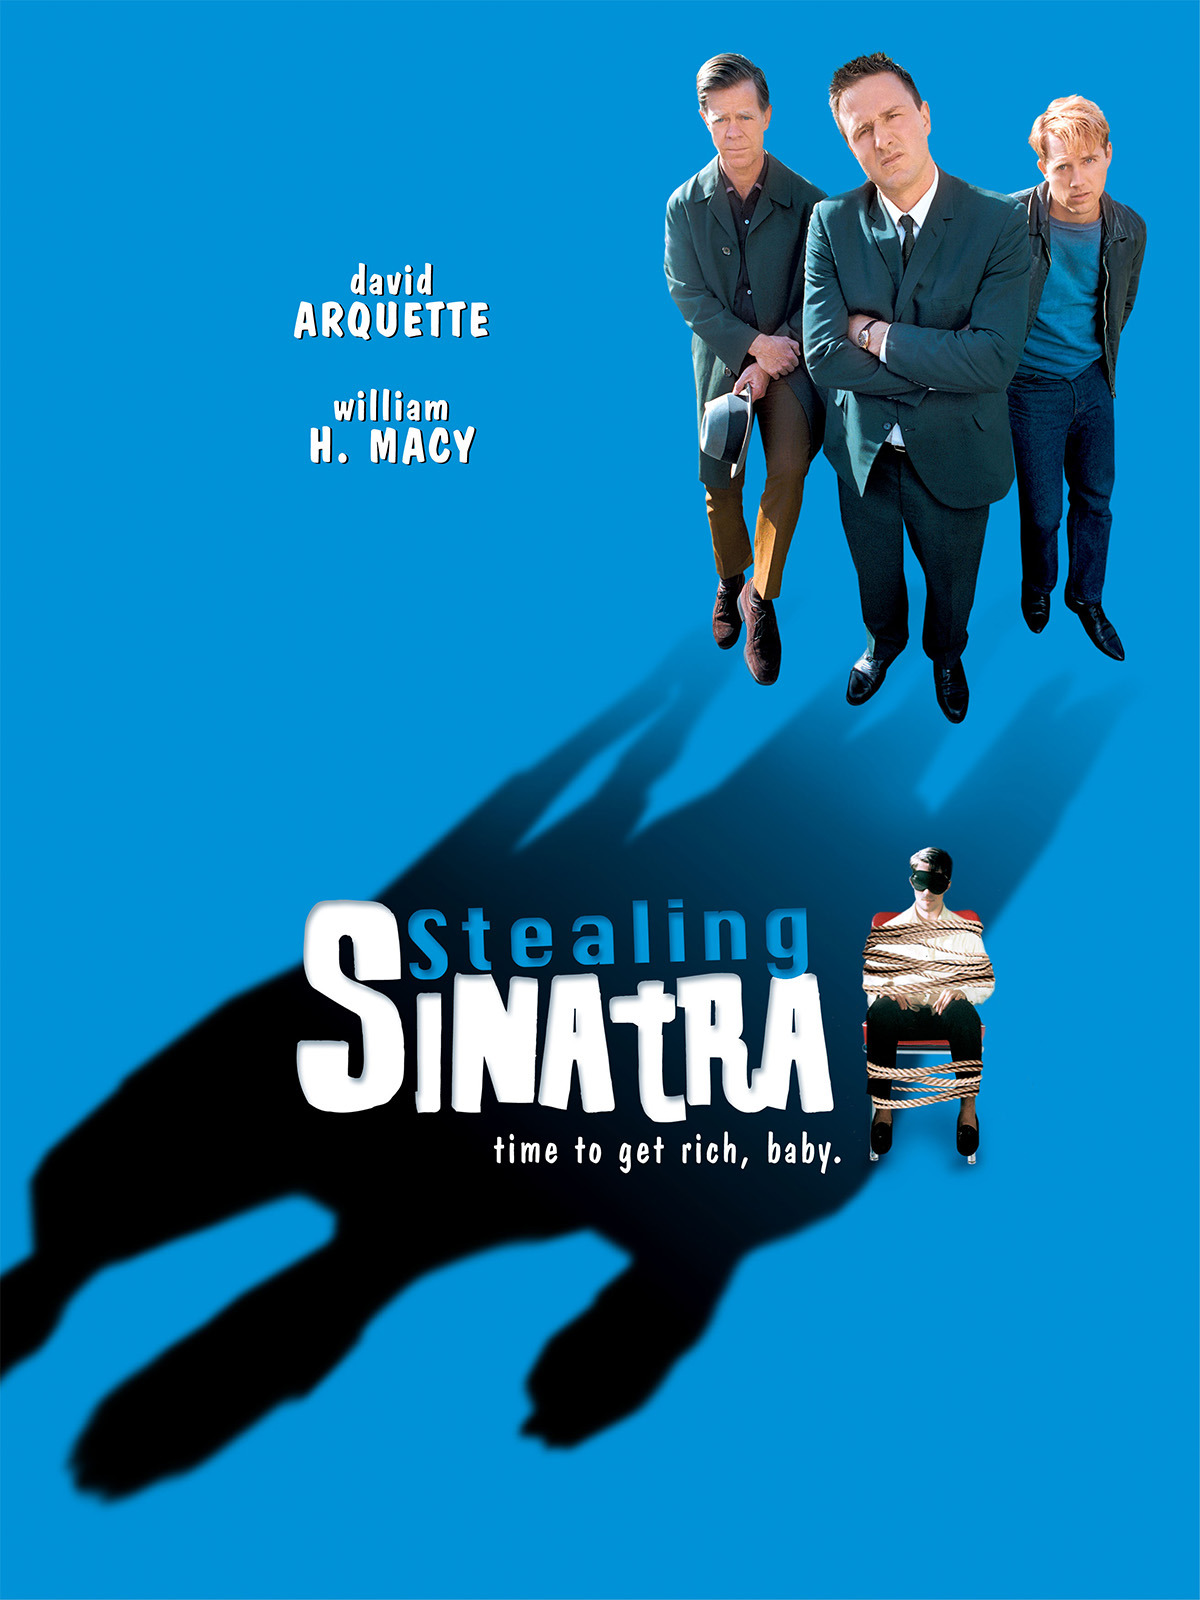 Stealing Sinatra (2003) Screenshot 4